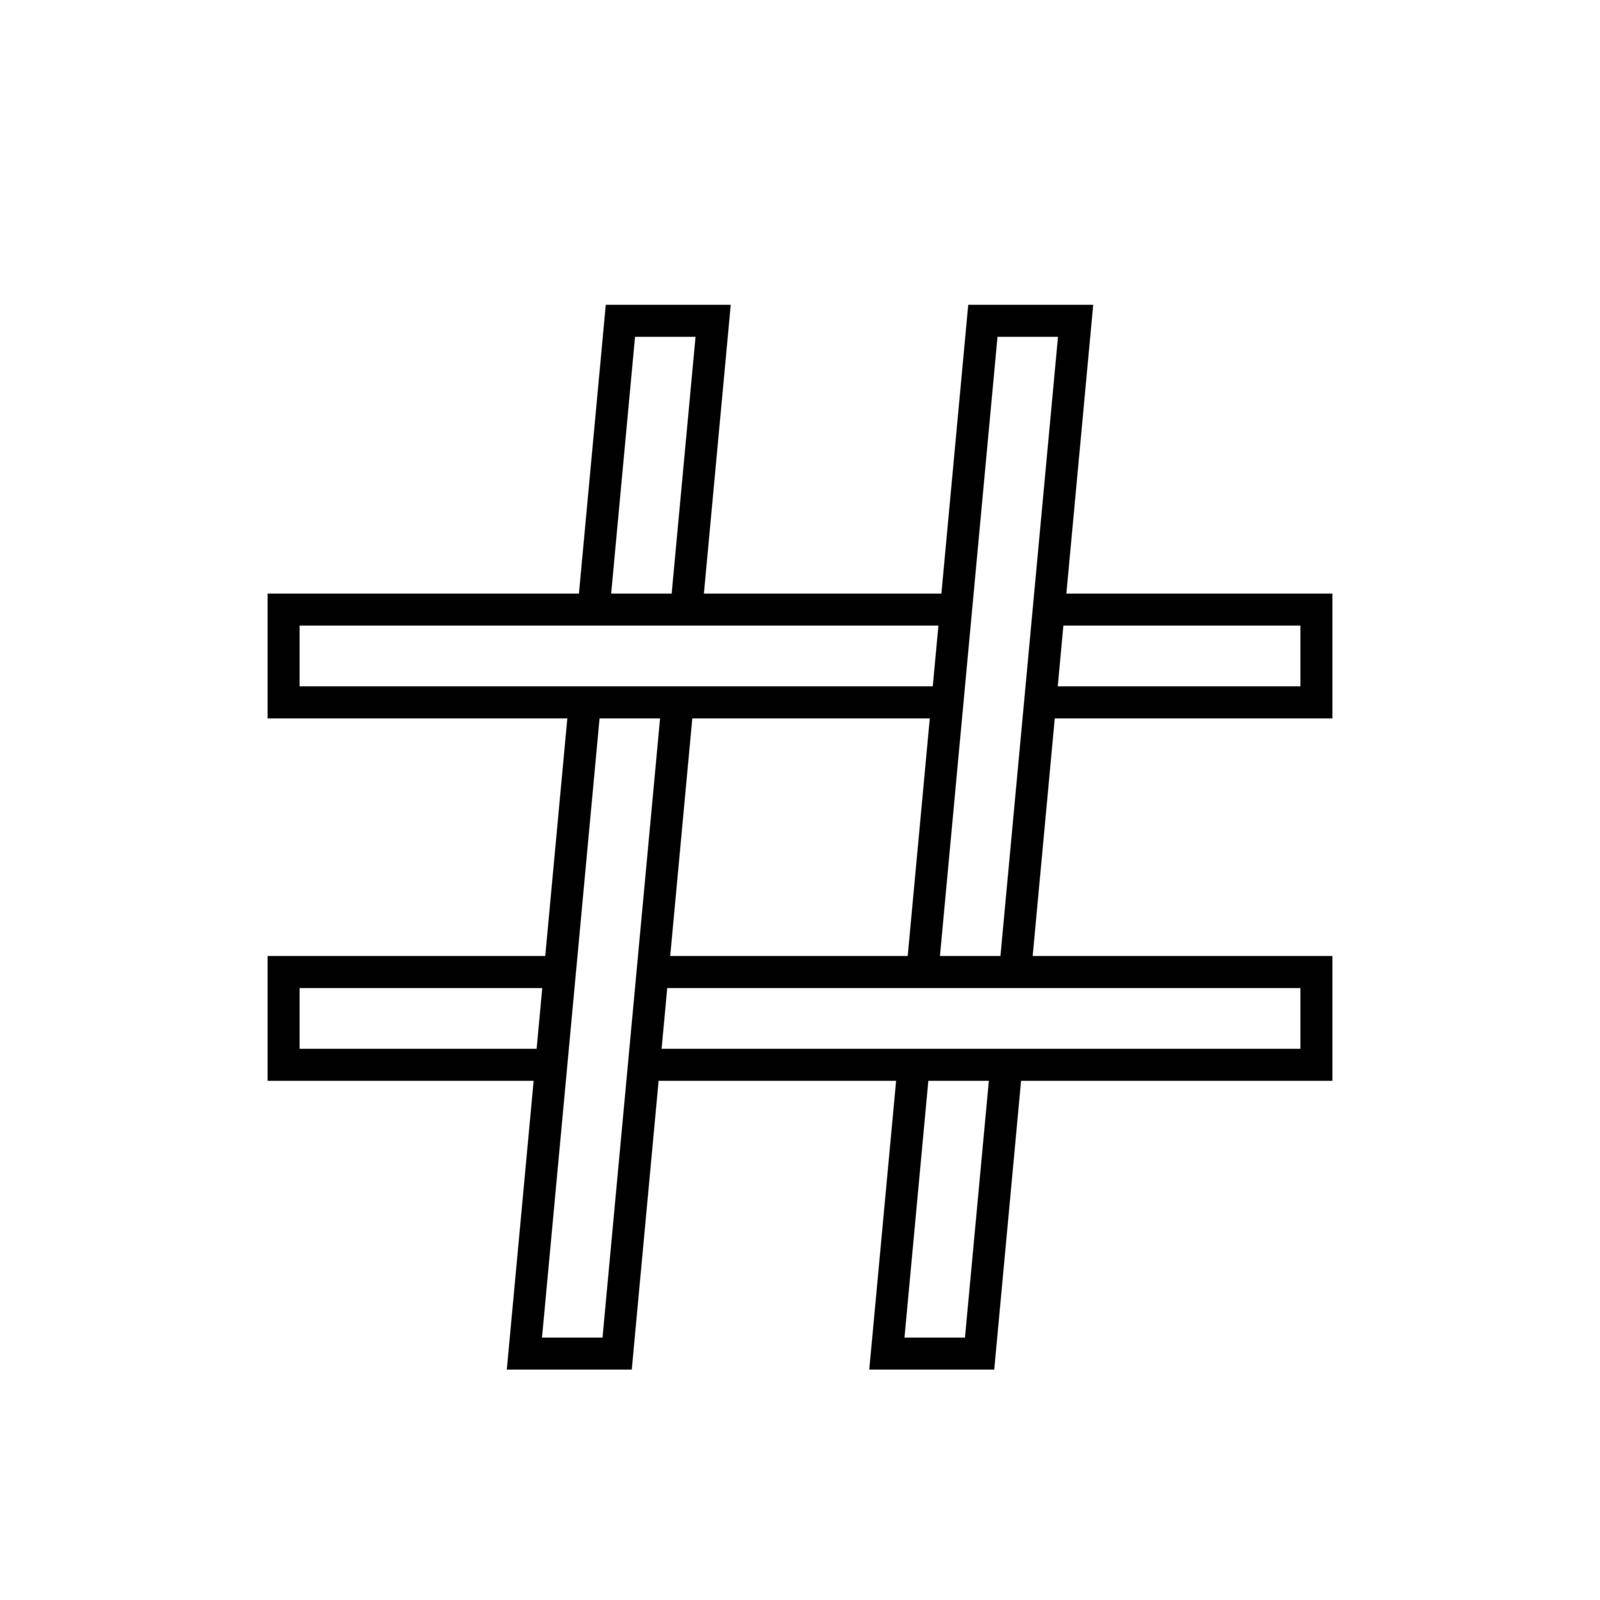 Hashtag icon, tag logo symbol stock illustration by koksikoks